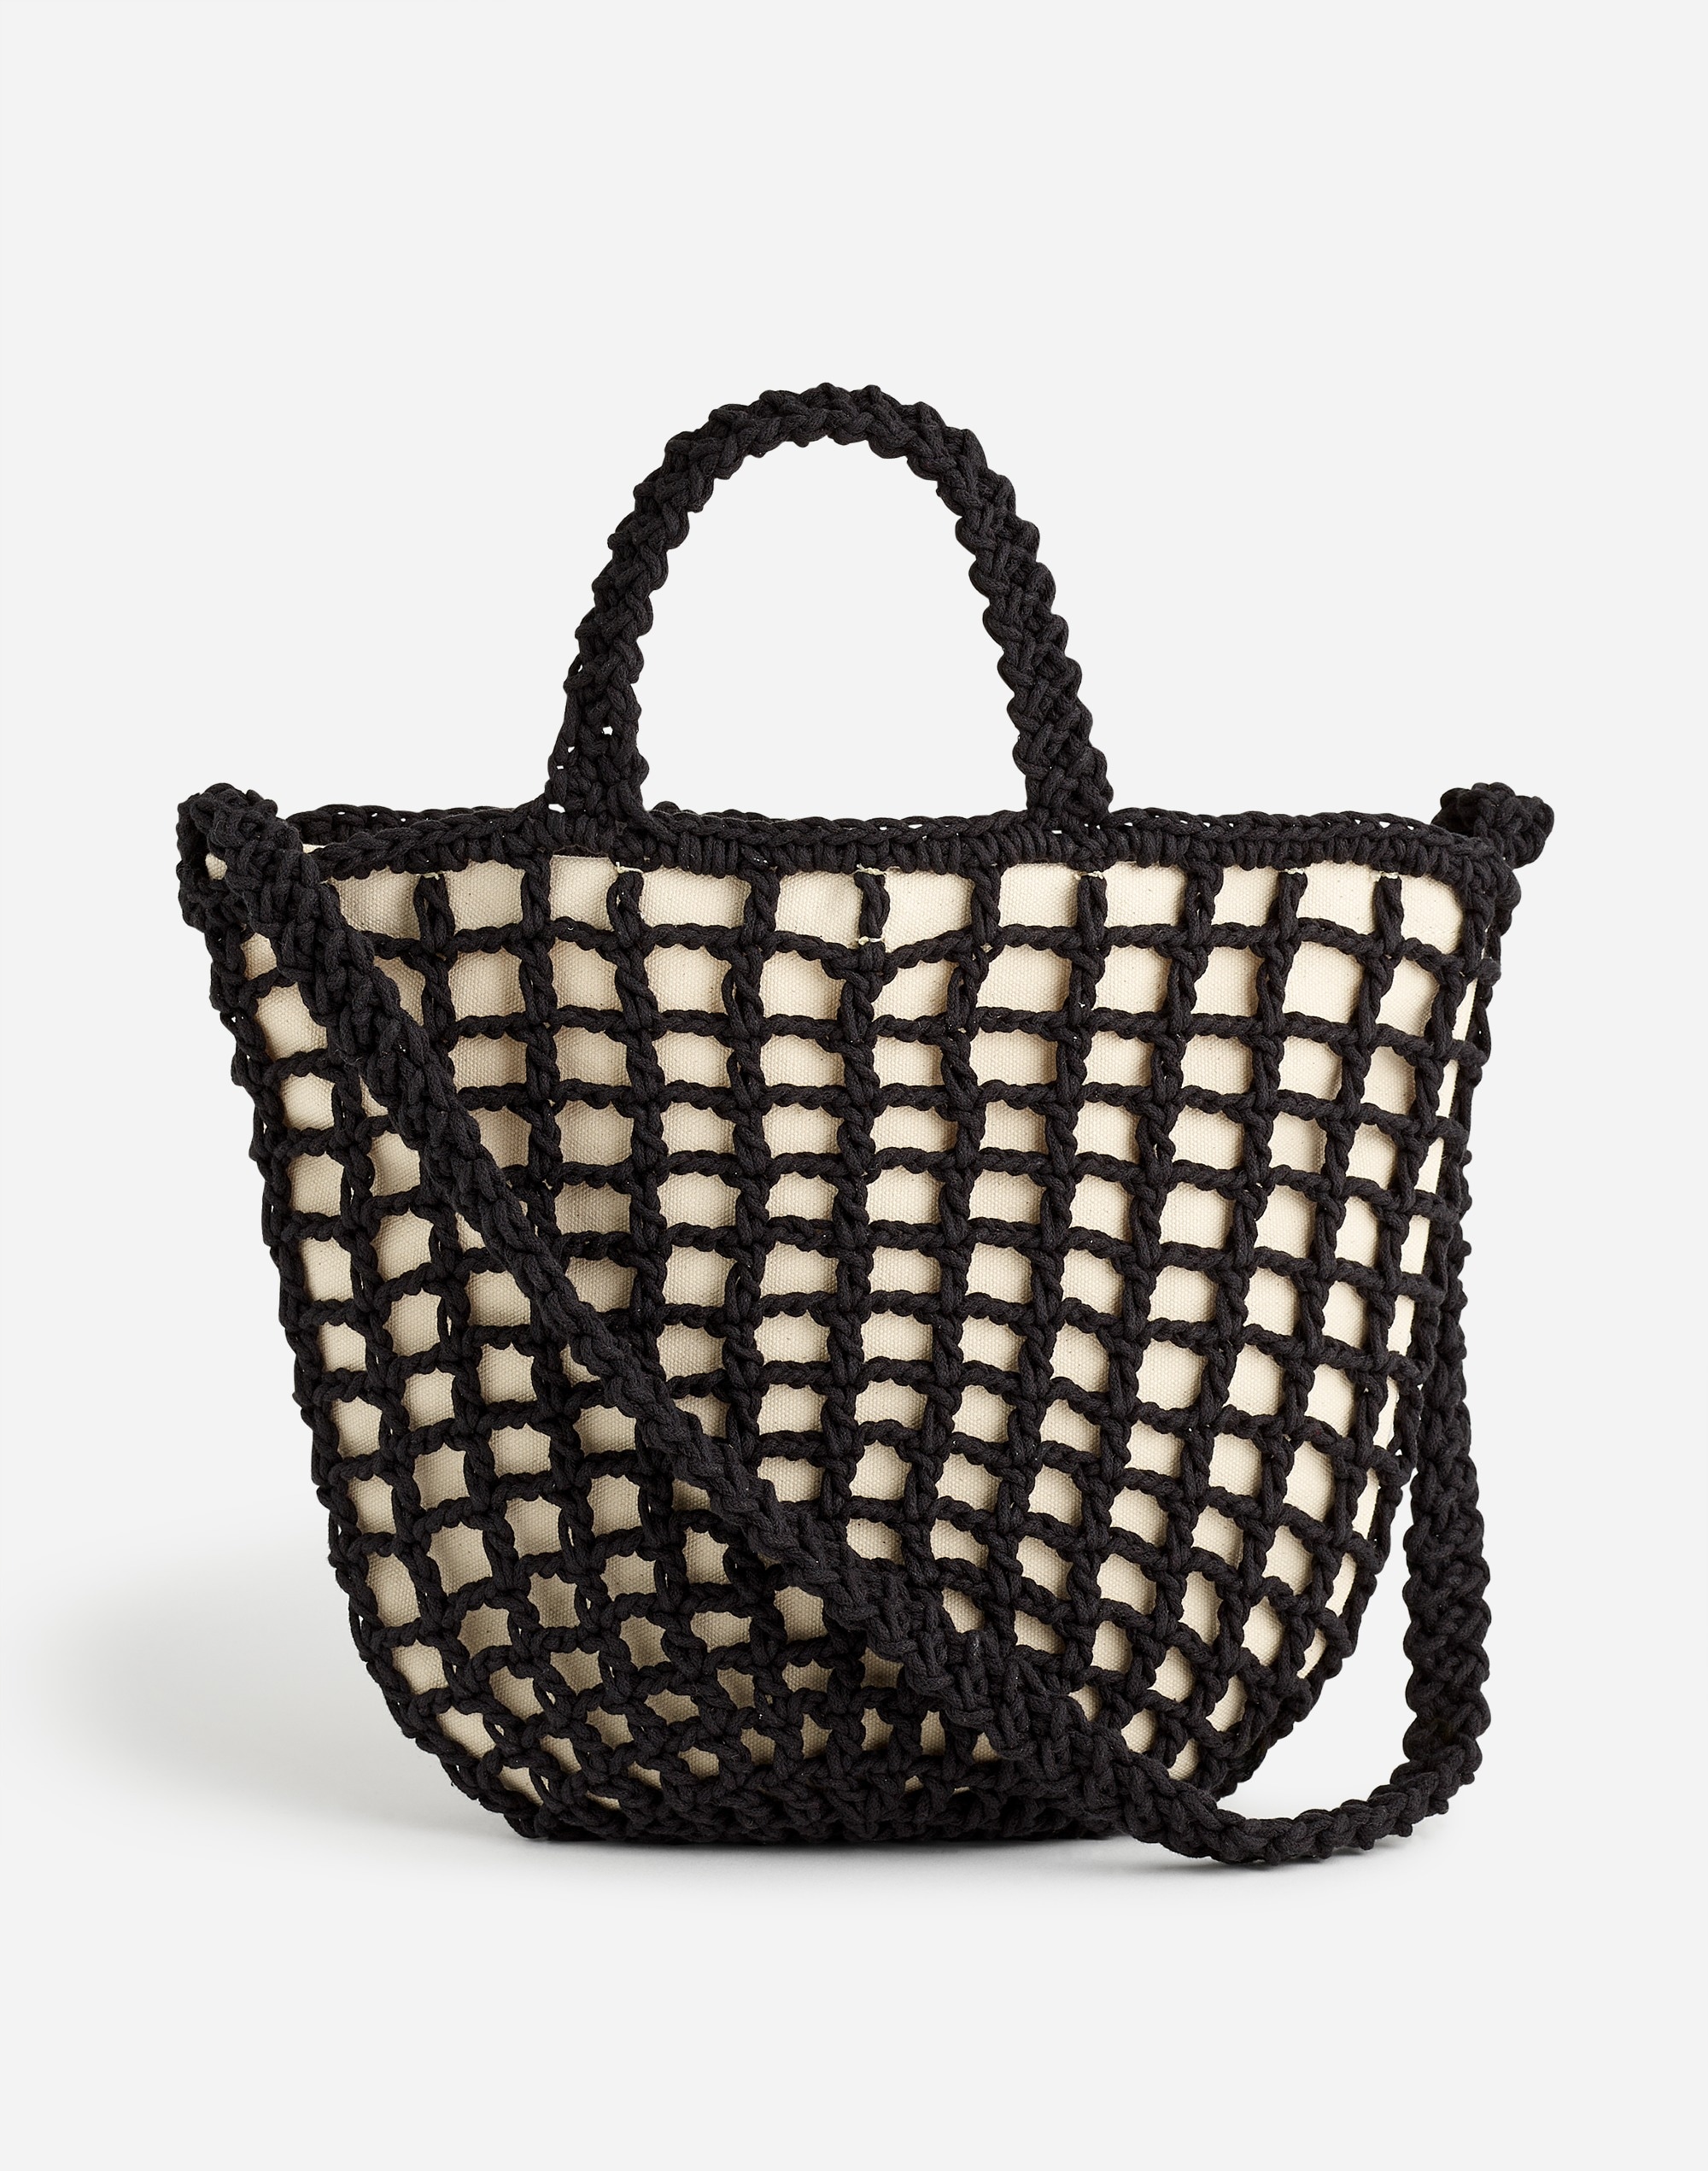 Mw The Crocheted Shoulder Bag In Black